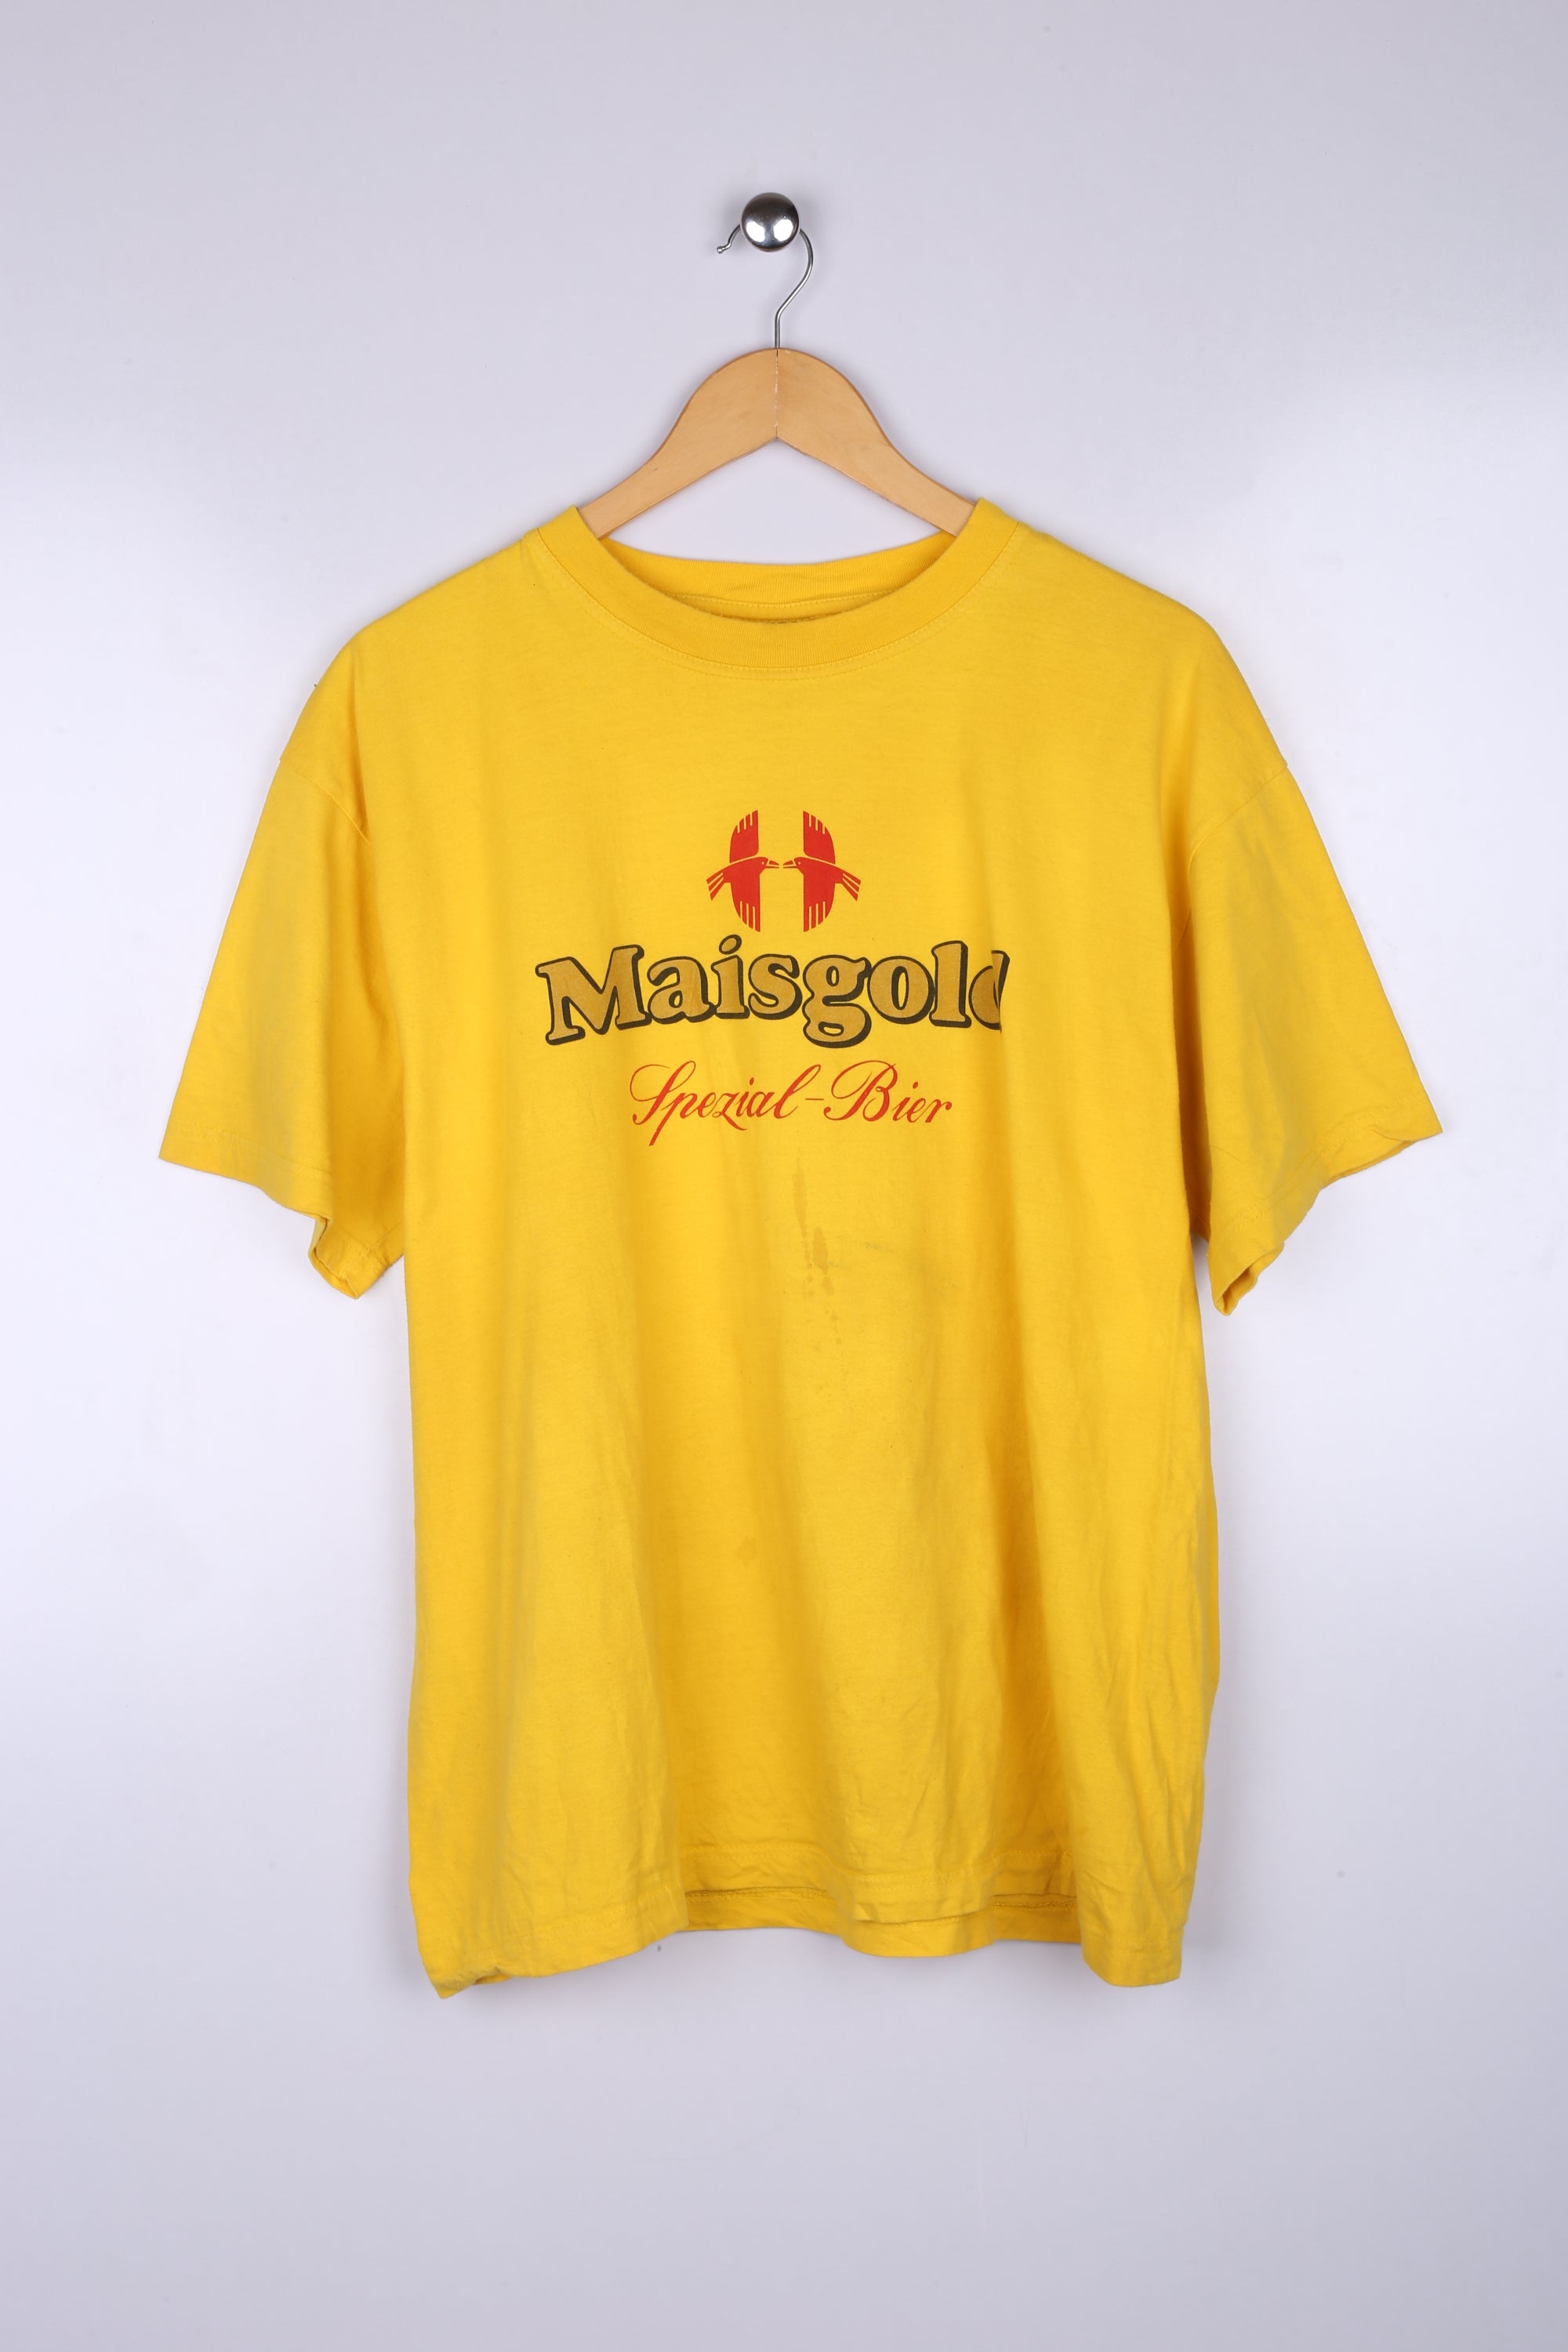 Vintage Masigold Graphic Tee Yellow X Large